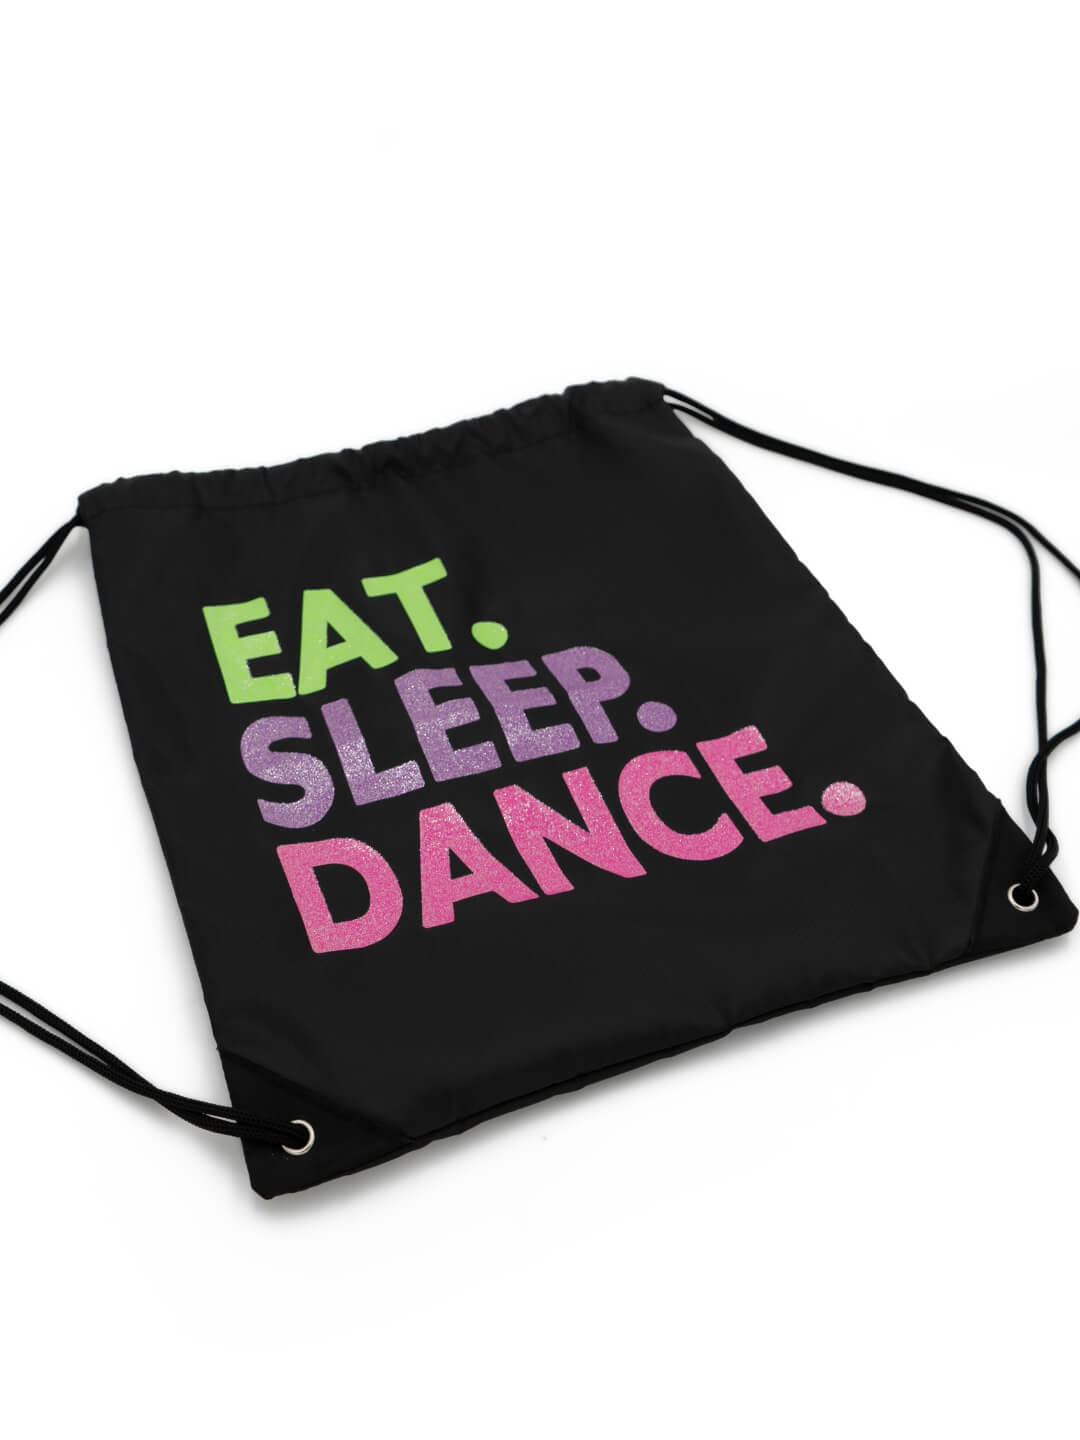 Eat. Sleep. Dance. Drawstring Bag